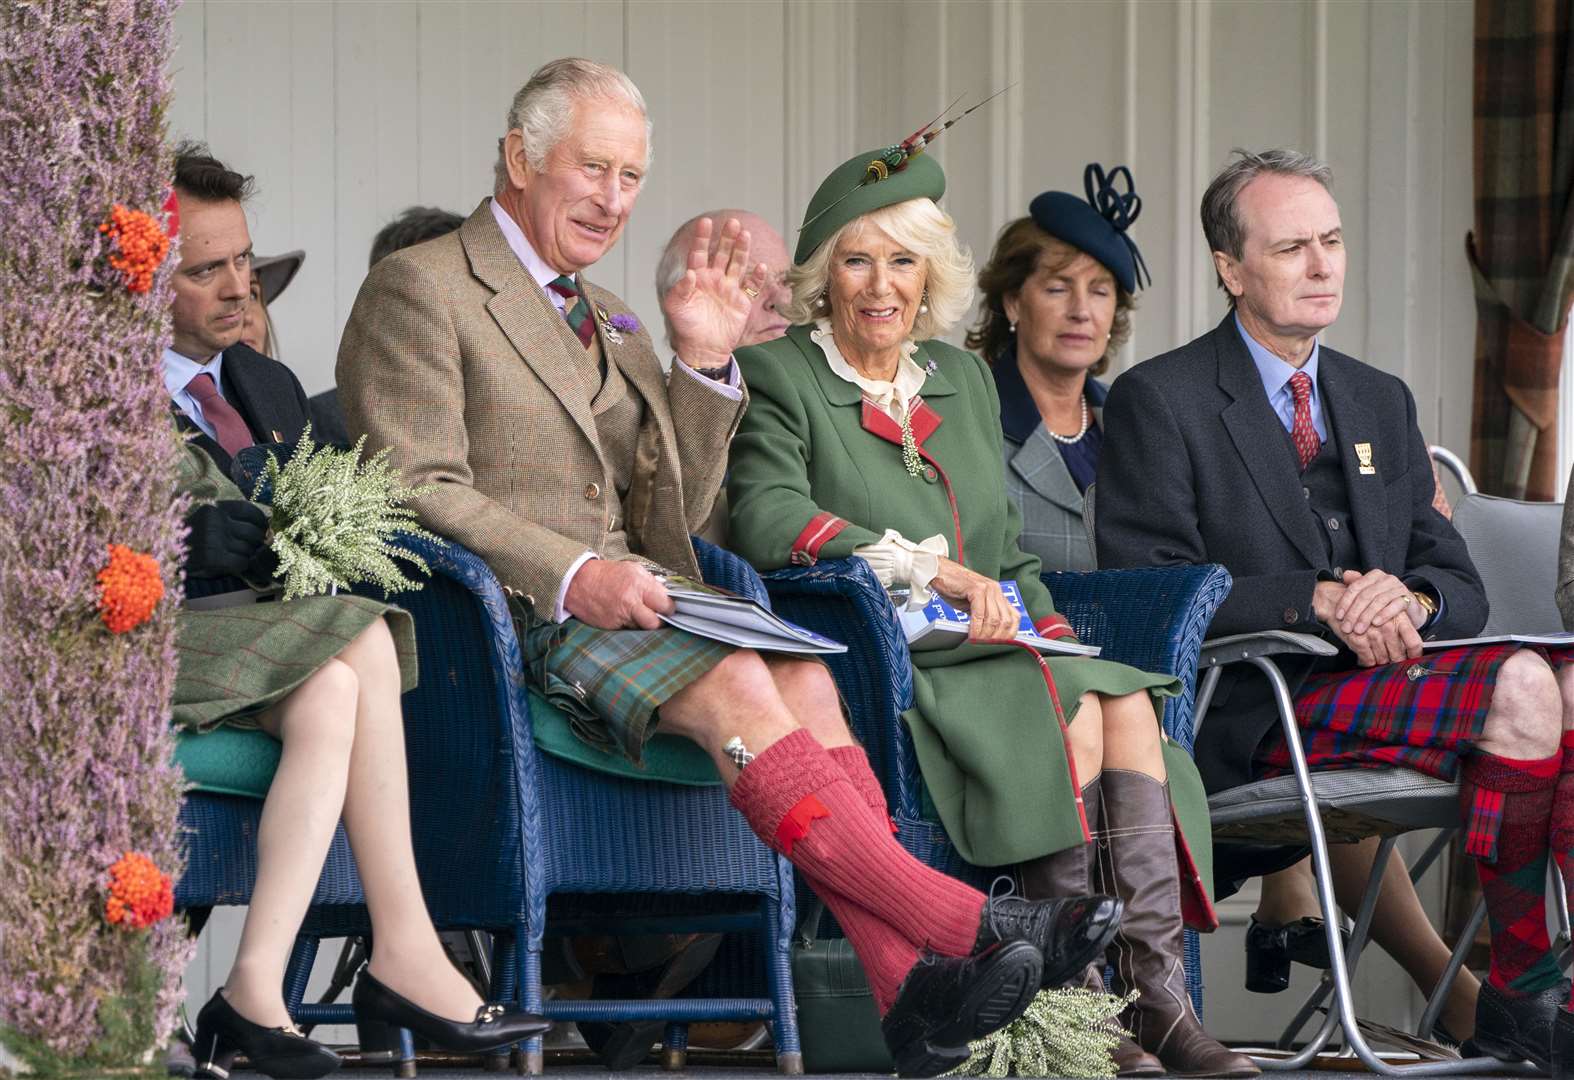 Charles and Camilla during the Braemar Royal Highland Gathering this month (Jane Barlow/PA)